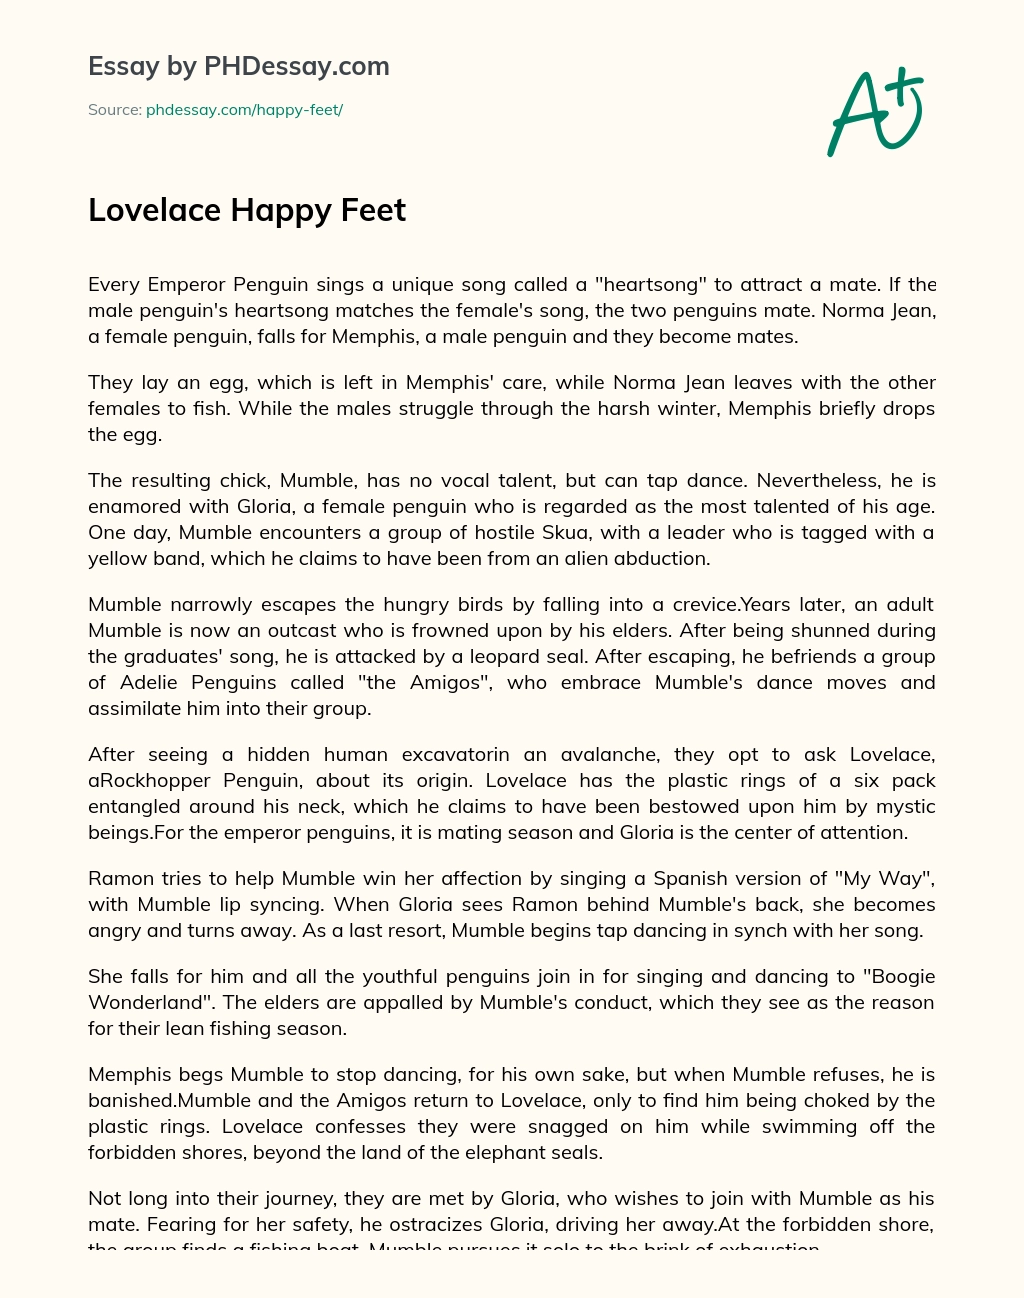 Lovelace Happy Feet essay